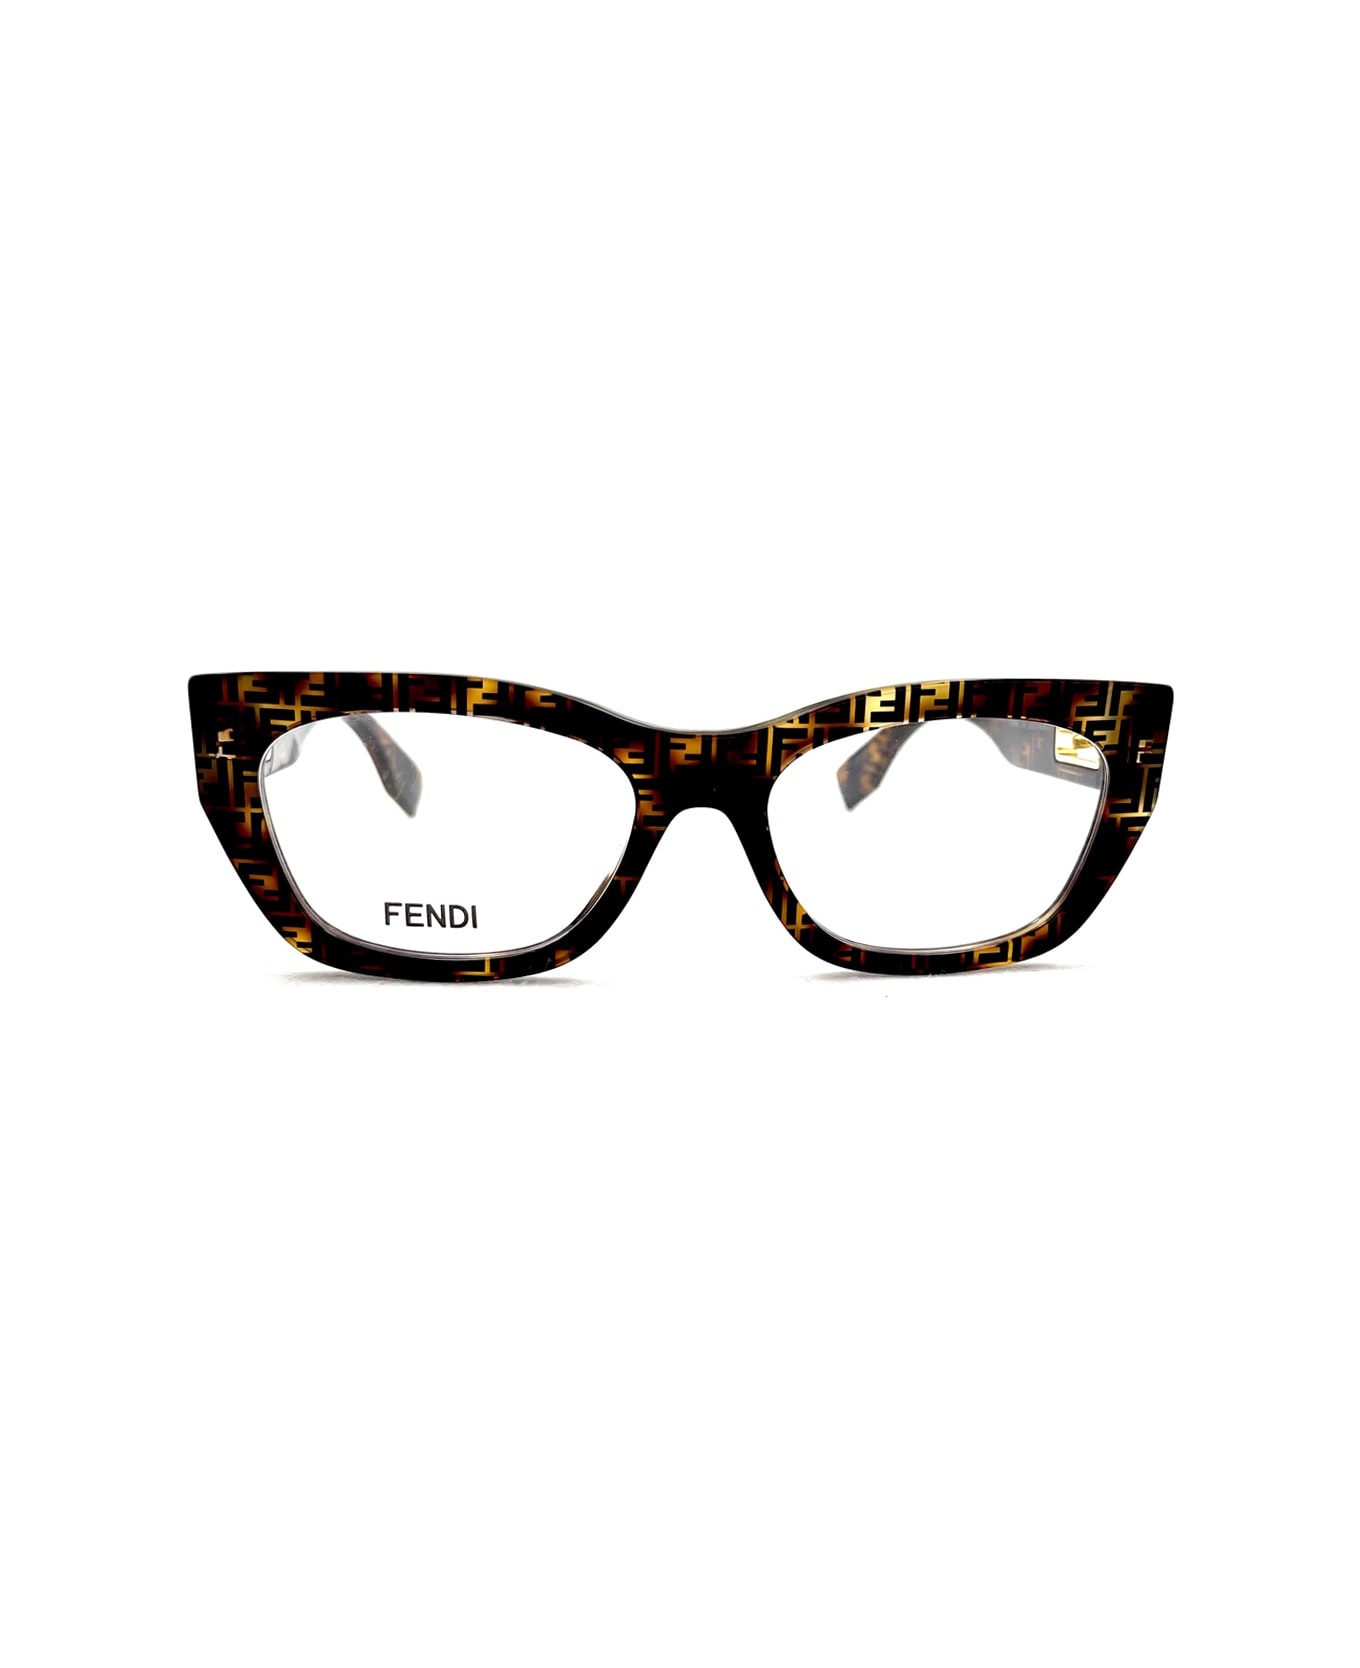 Fendi Eyewear Fe50082i 055 Glasses - Marrone アイウェア